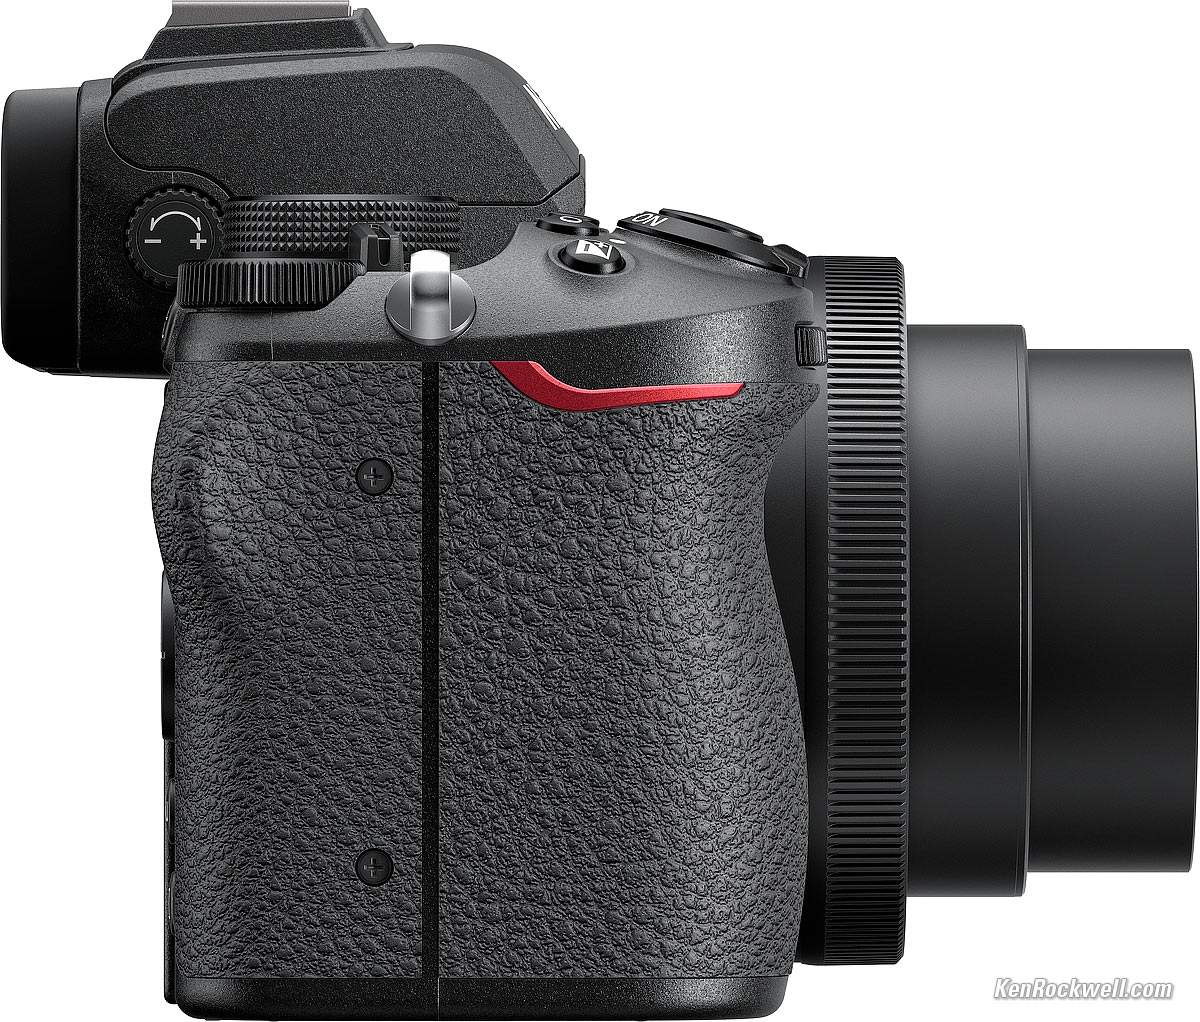  Nikon Z50 Mirrorless Camera Body 4K UHD DX-Format 2 Lens Kit  NIKKOR Z DX 16-50mm F/3.5-6.3 VR + Z DX 50-250mm F/4.5-6.3 VR Bundle with  Deco Gear Case + Microphone +